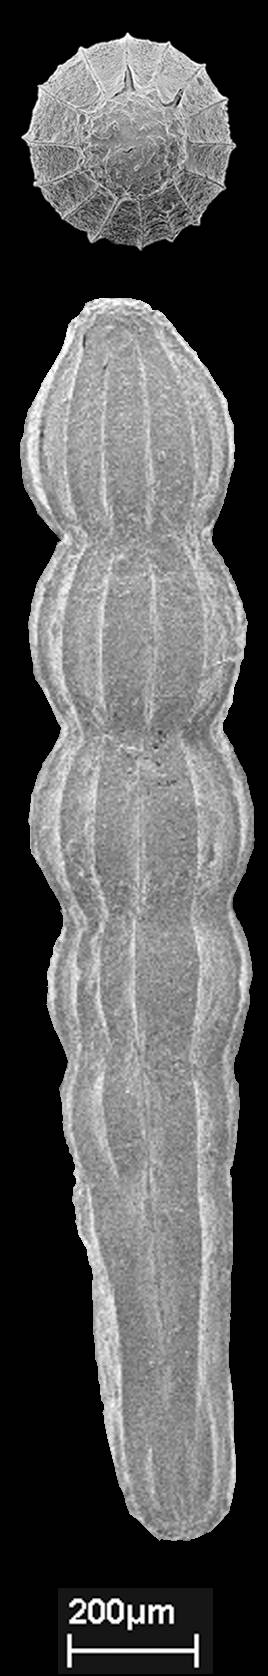 To NMNH Paleobiology Collection (Chrysalogonium breviloculum cc21442)